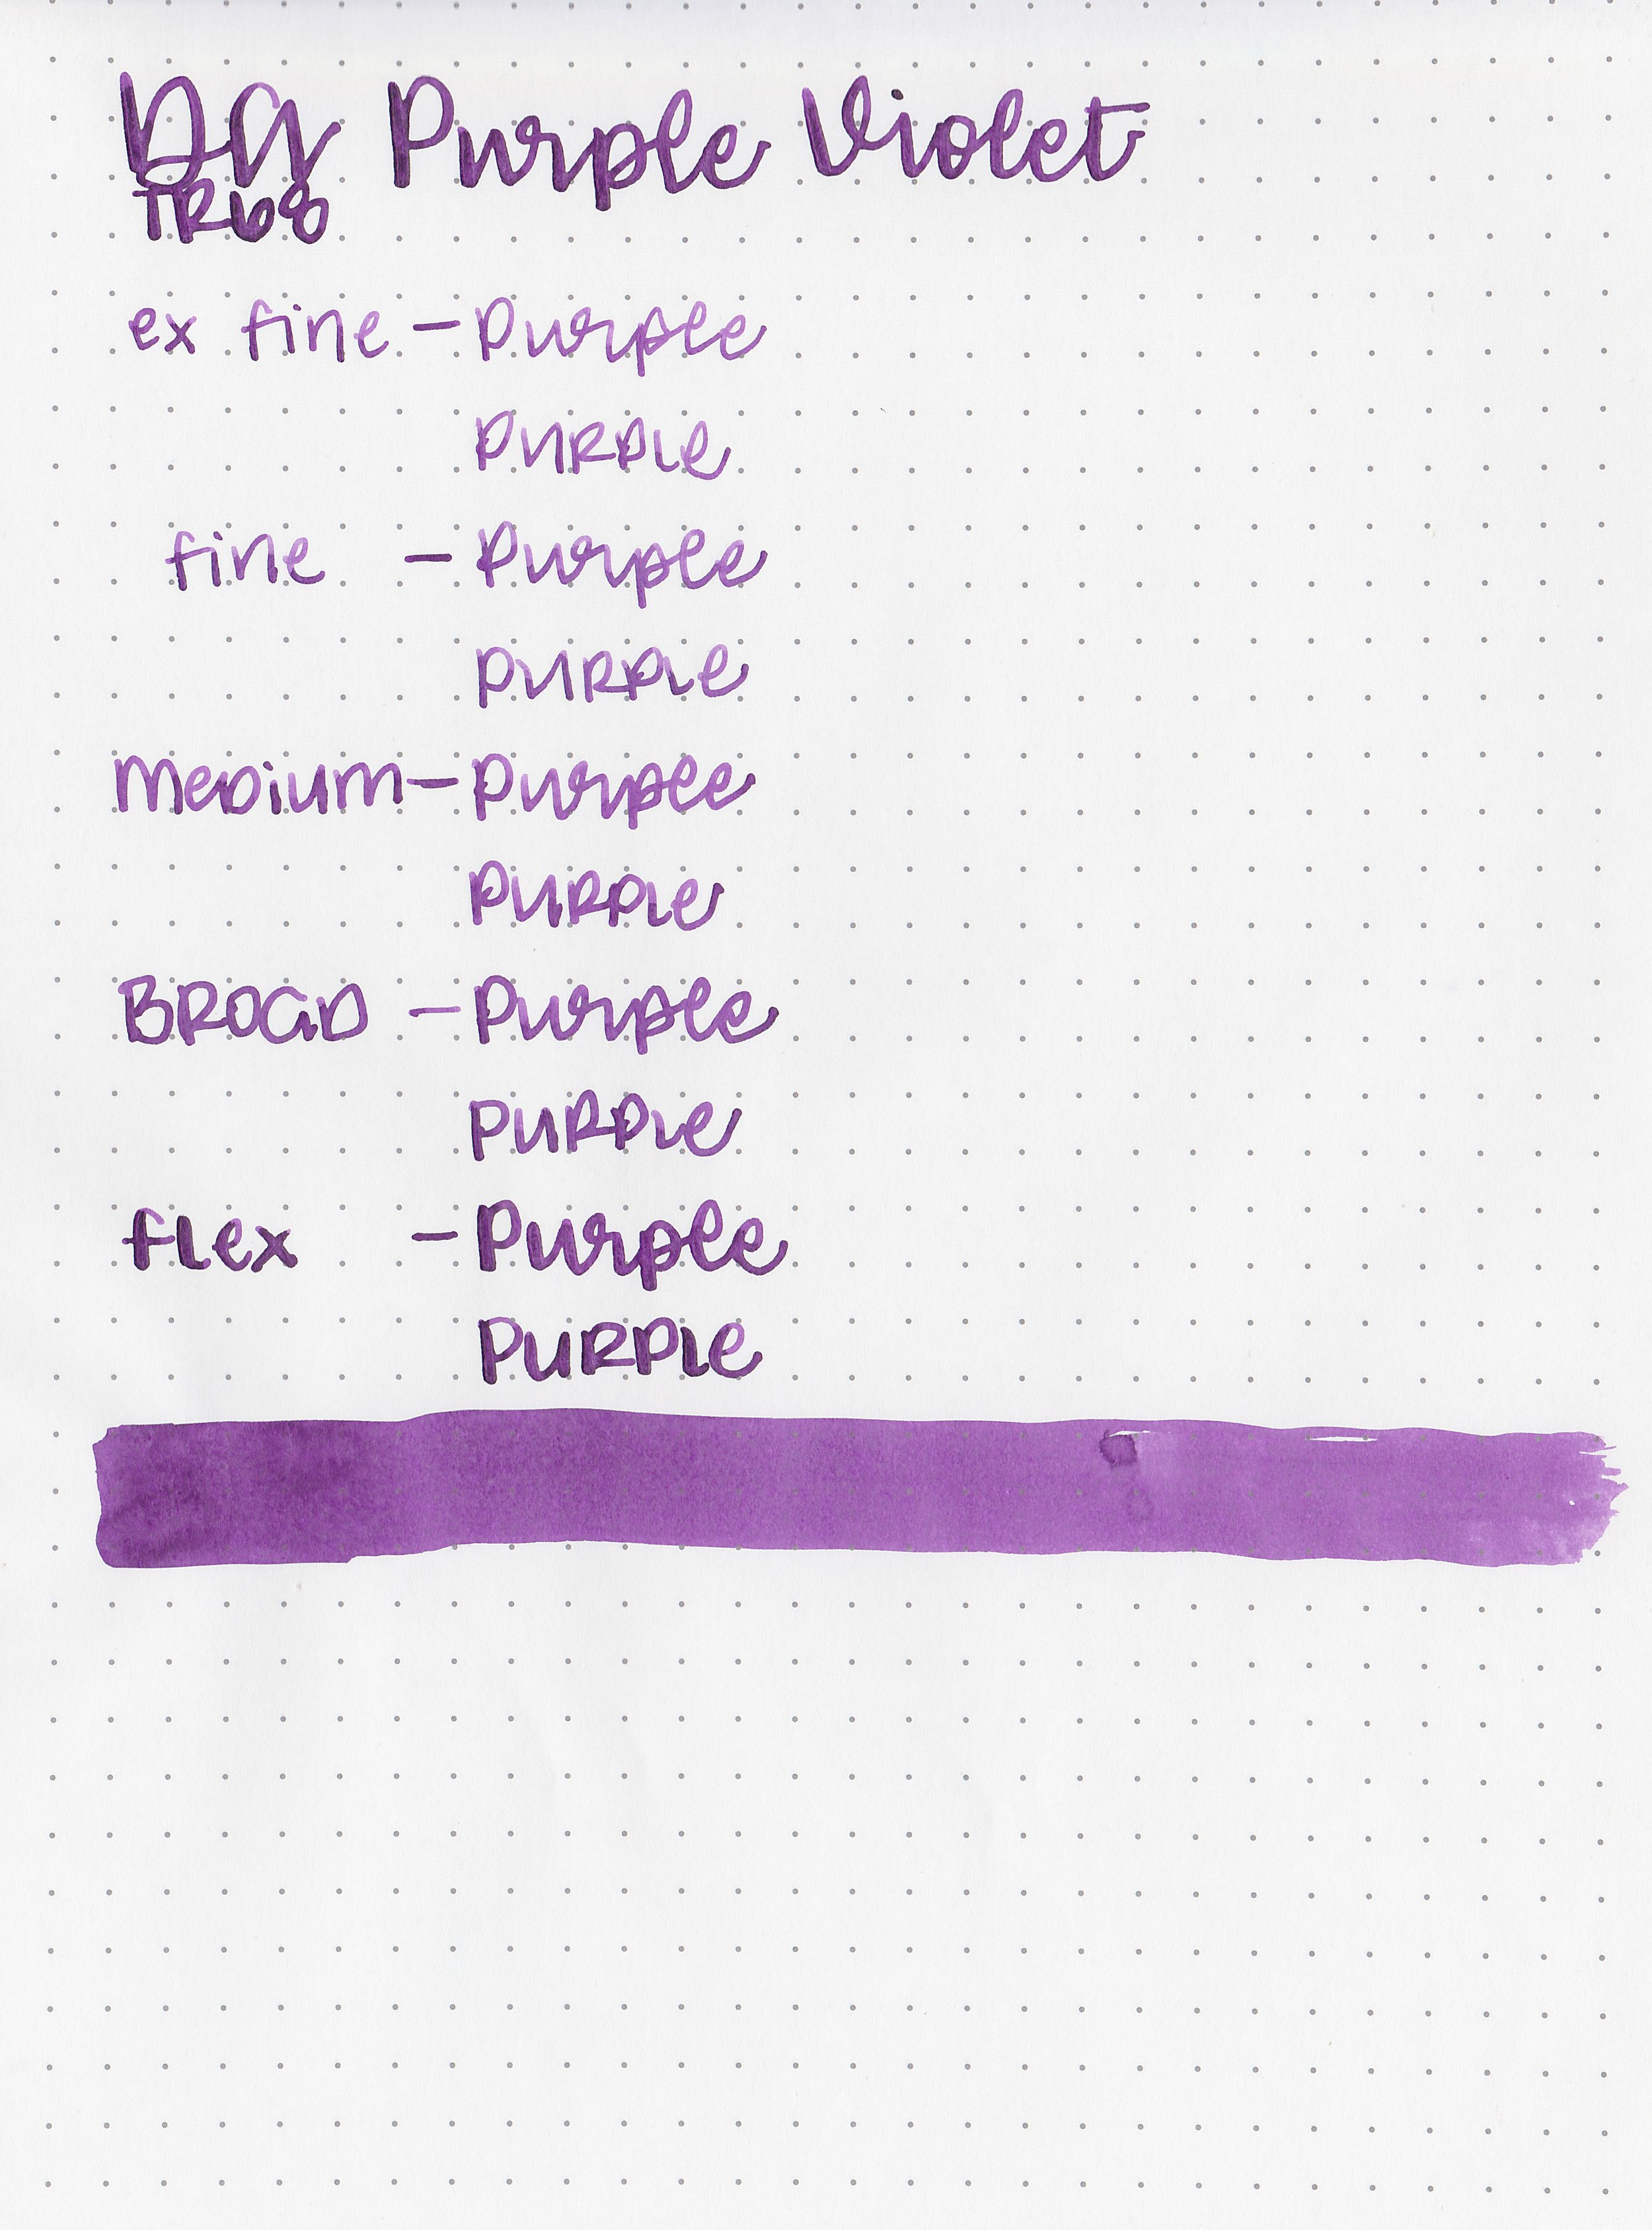 da-purple-violet-7.jpg